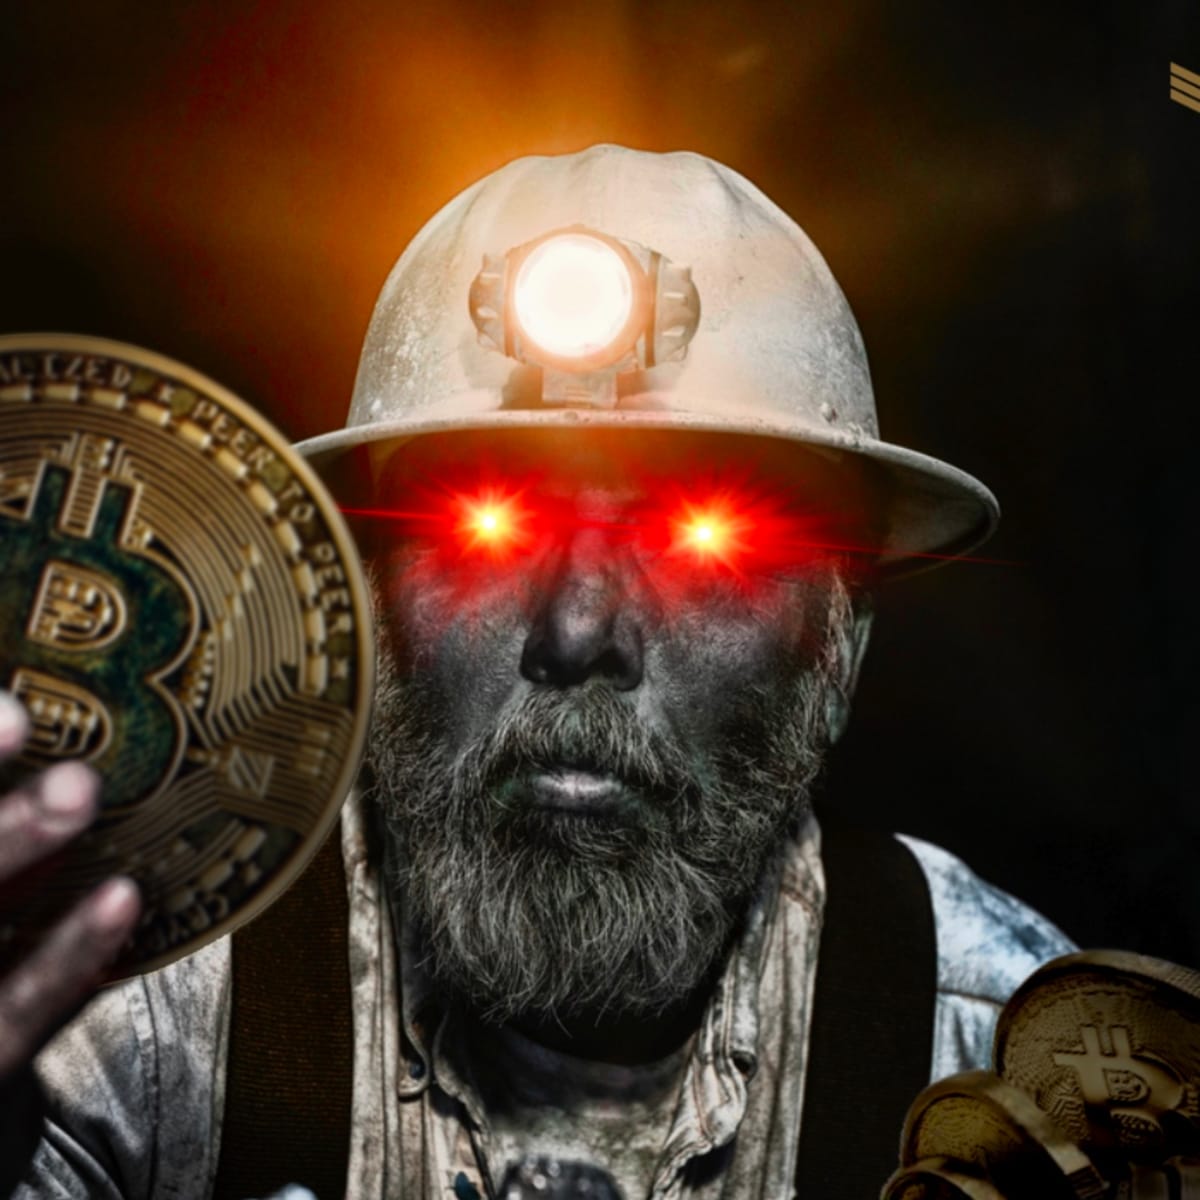 How Small Solo Miners Solve Bitcoin Blocks - Bitcoin Magazine